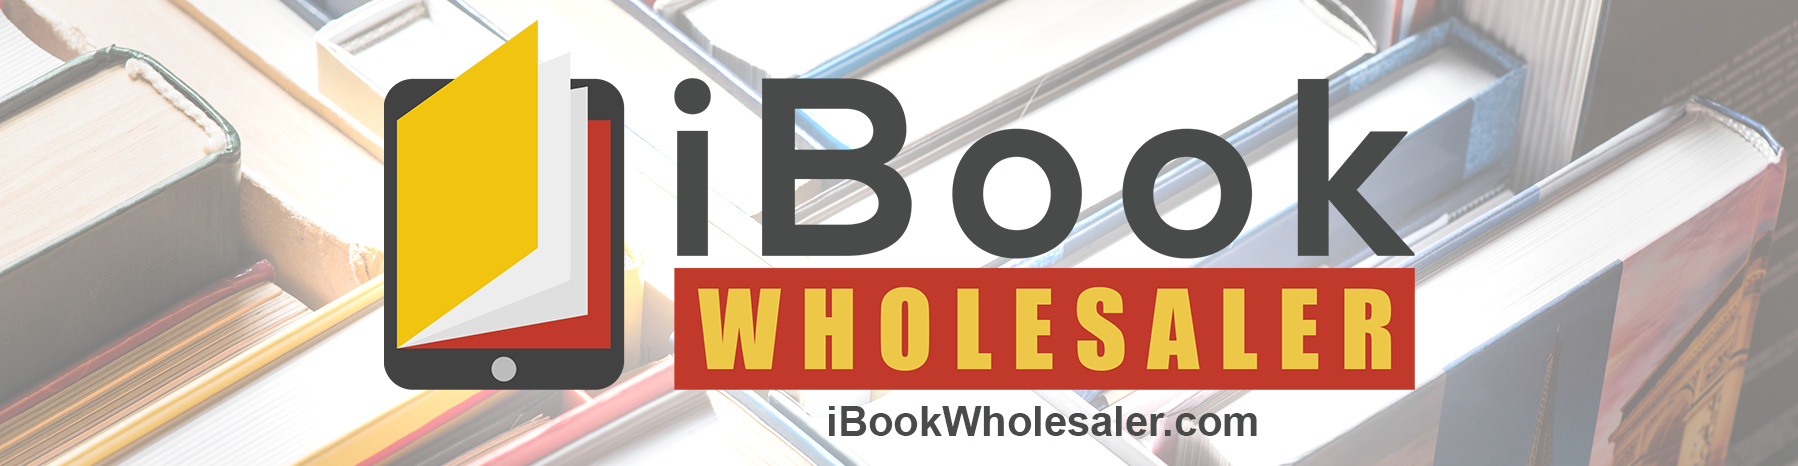 iBook Wholesaler header image